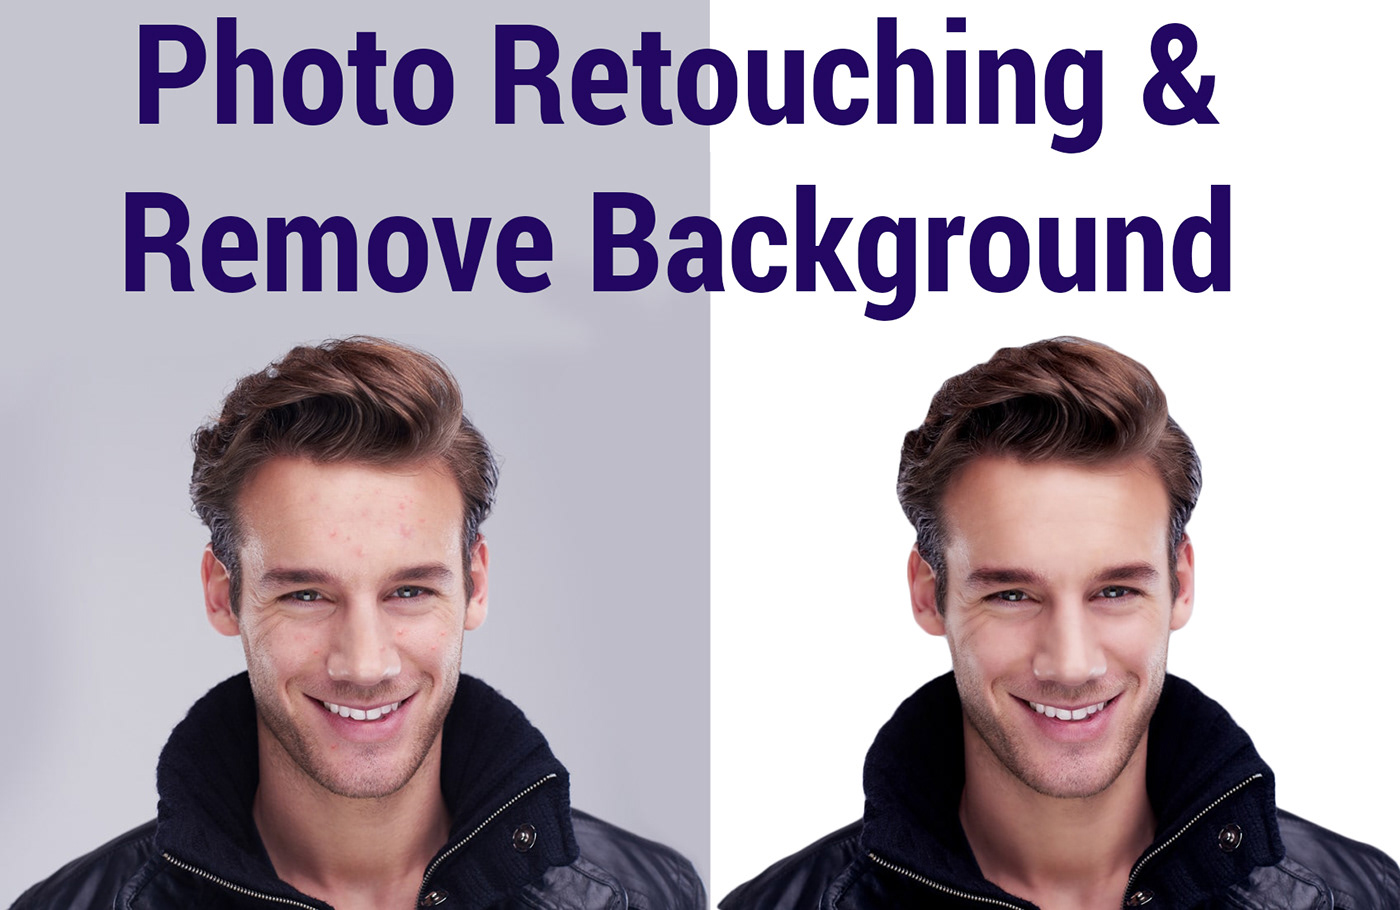 Background removal bg remove Editing  photo editing Photo Retouching Photoshop Editing product photo Remove BG Resizeing transpareng background